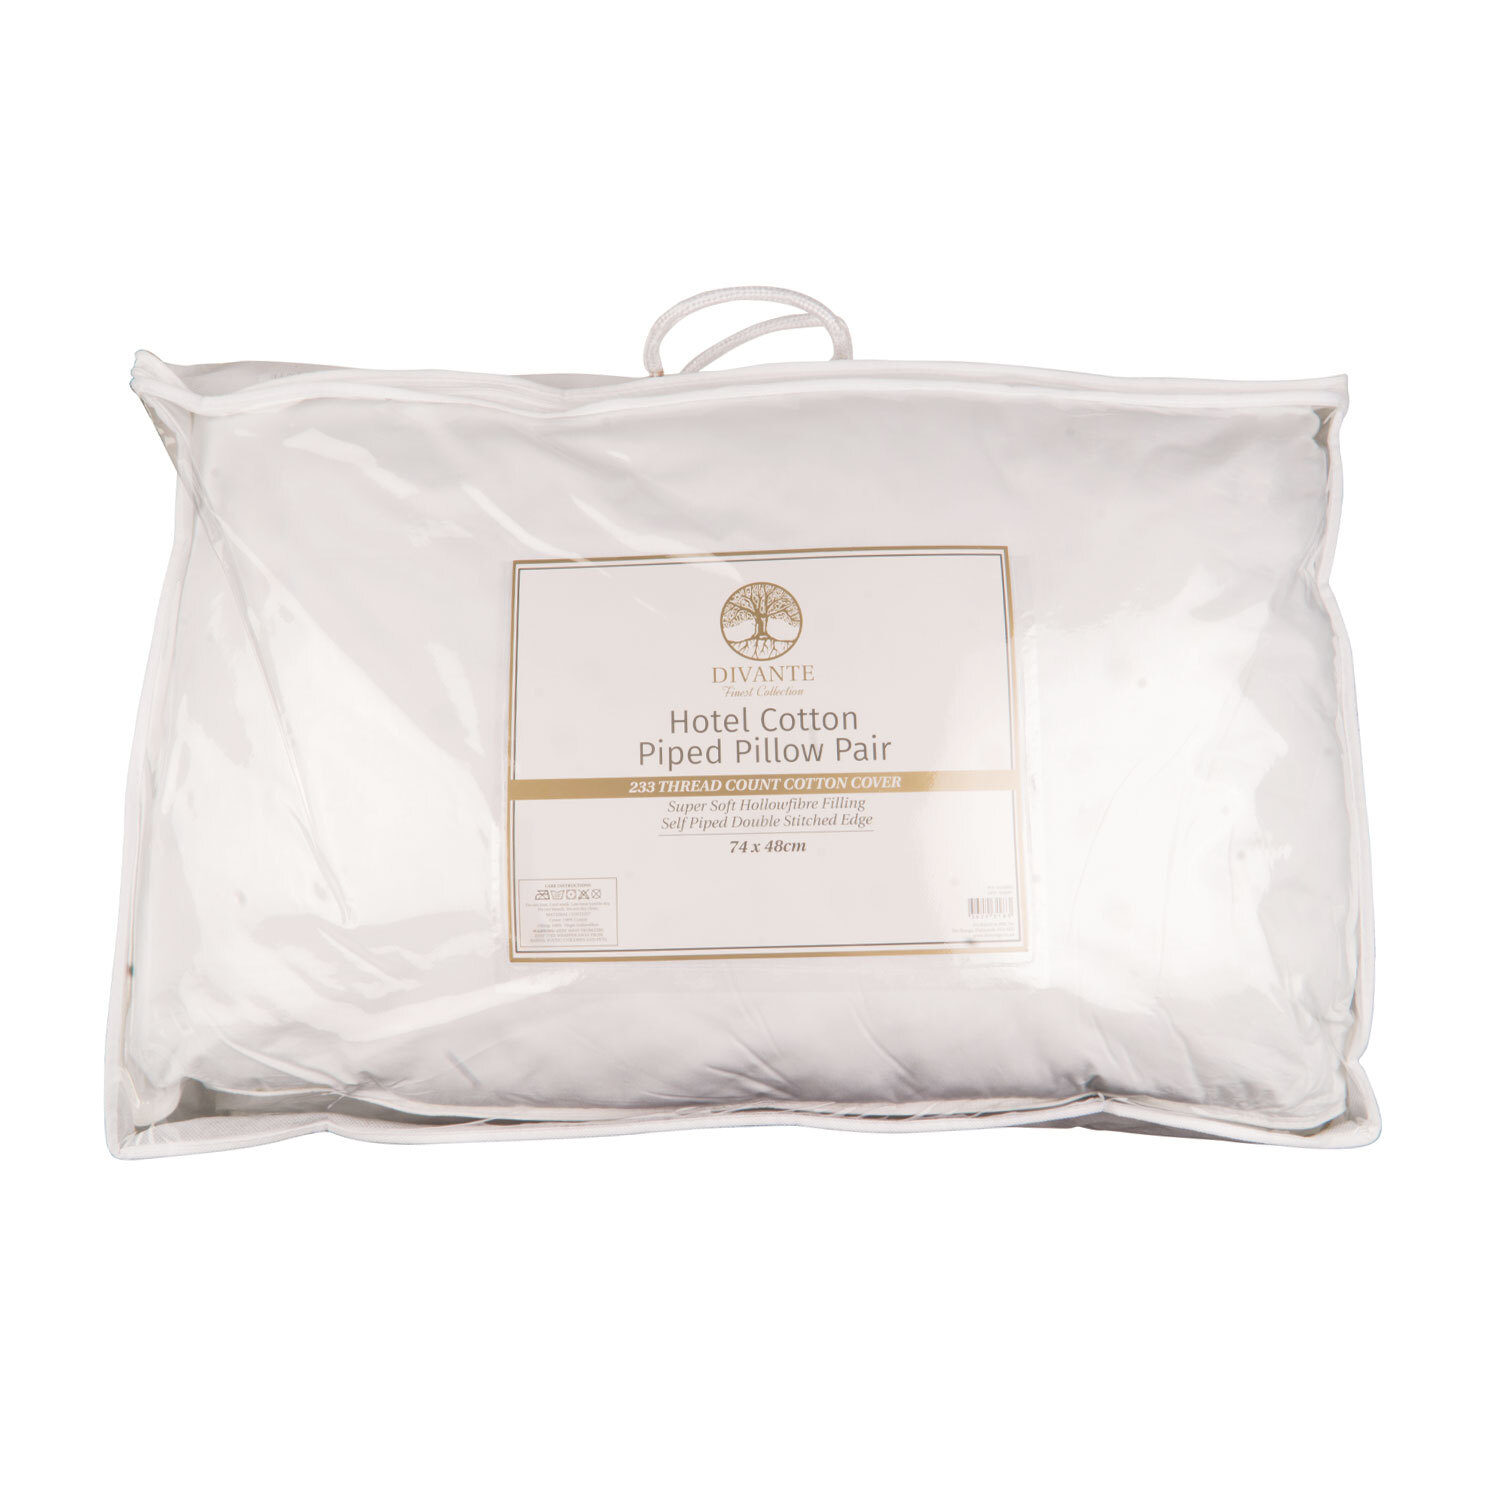 Divante Finest White Cotton Piped Pillows 74 x 48cm Image